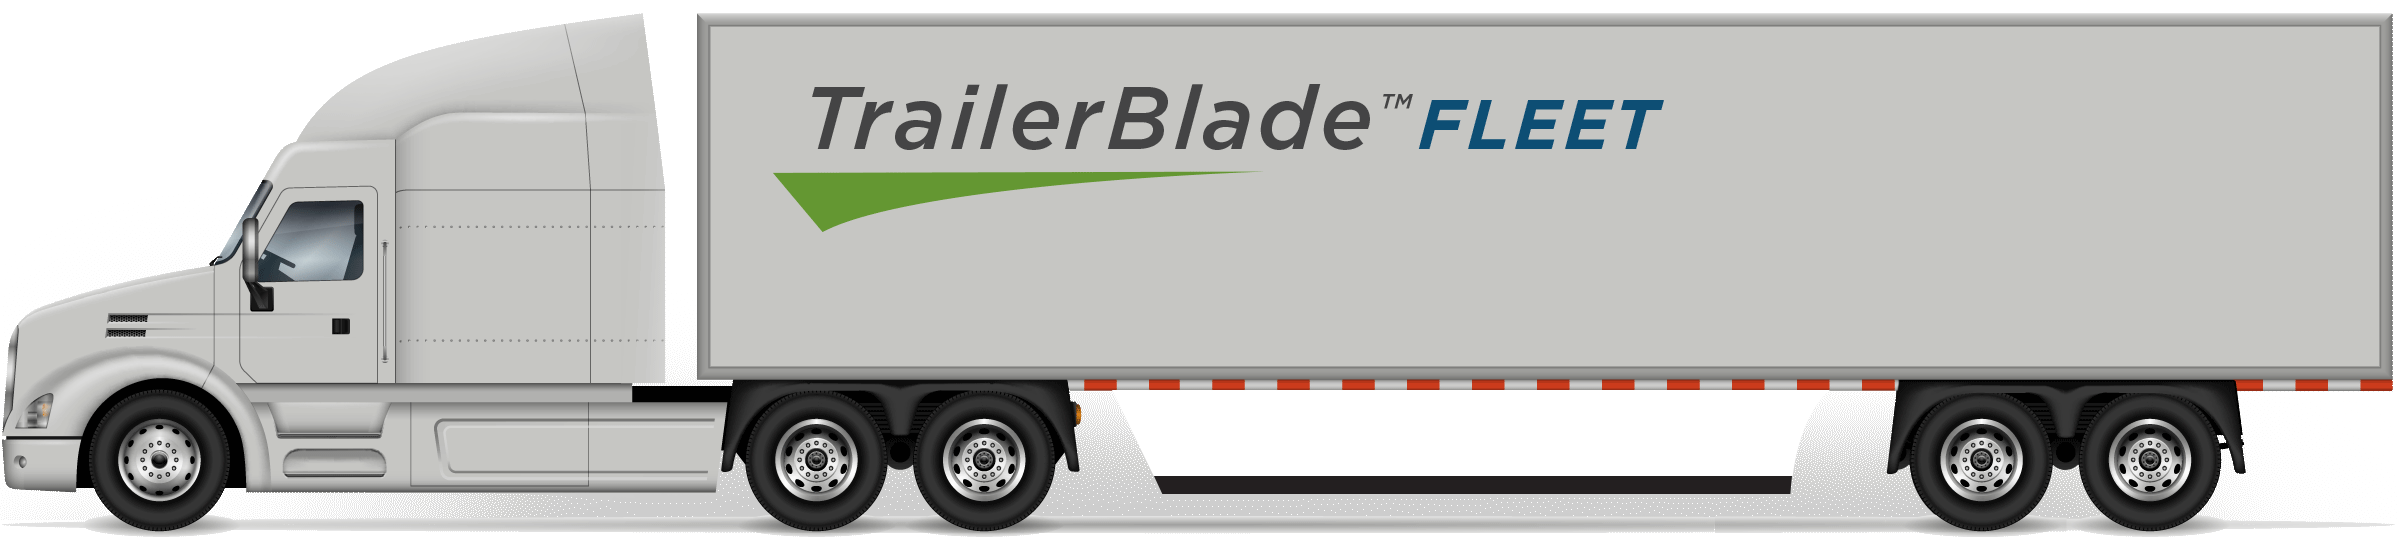 trailerblade fleet side profile